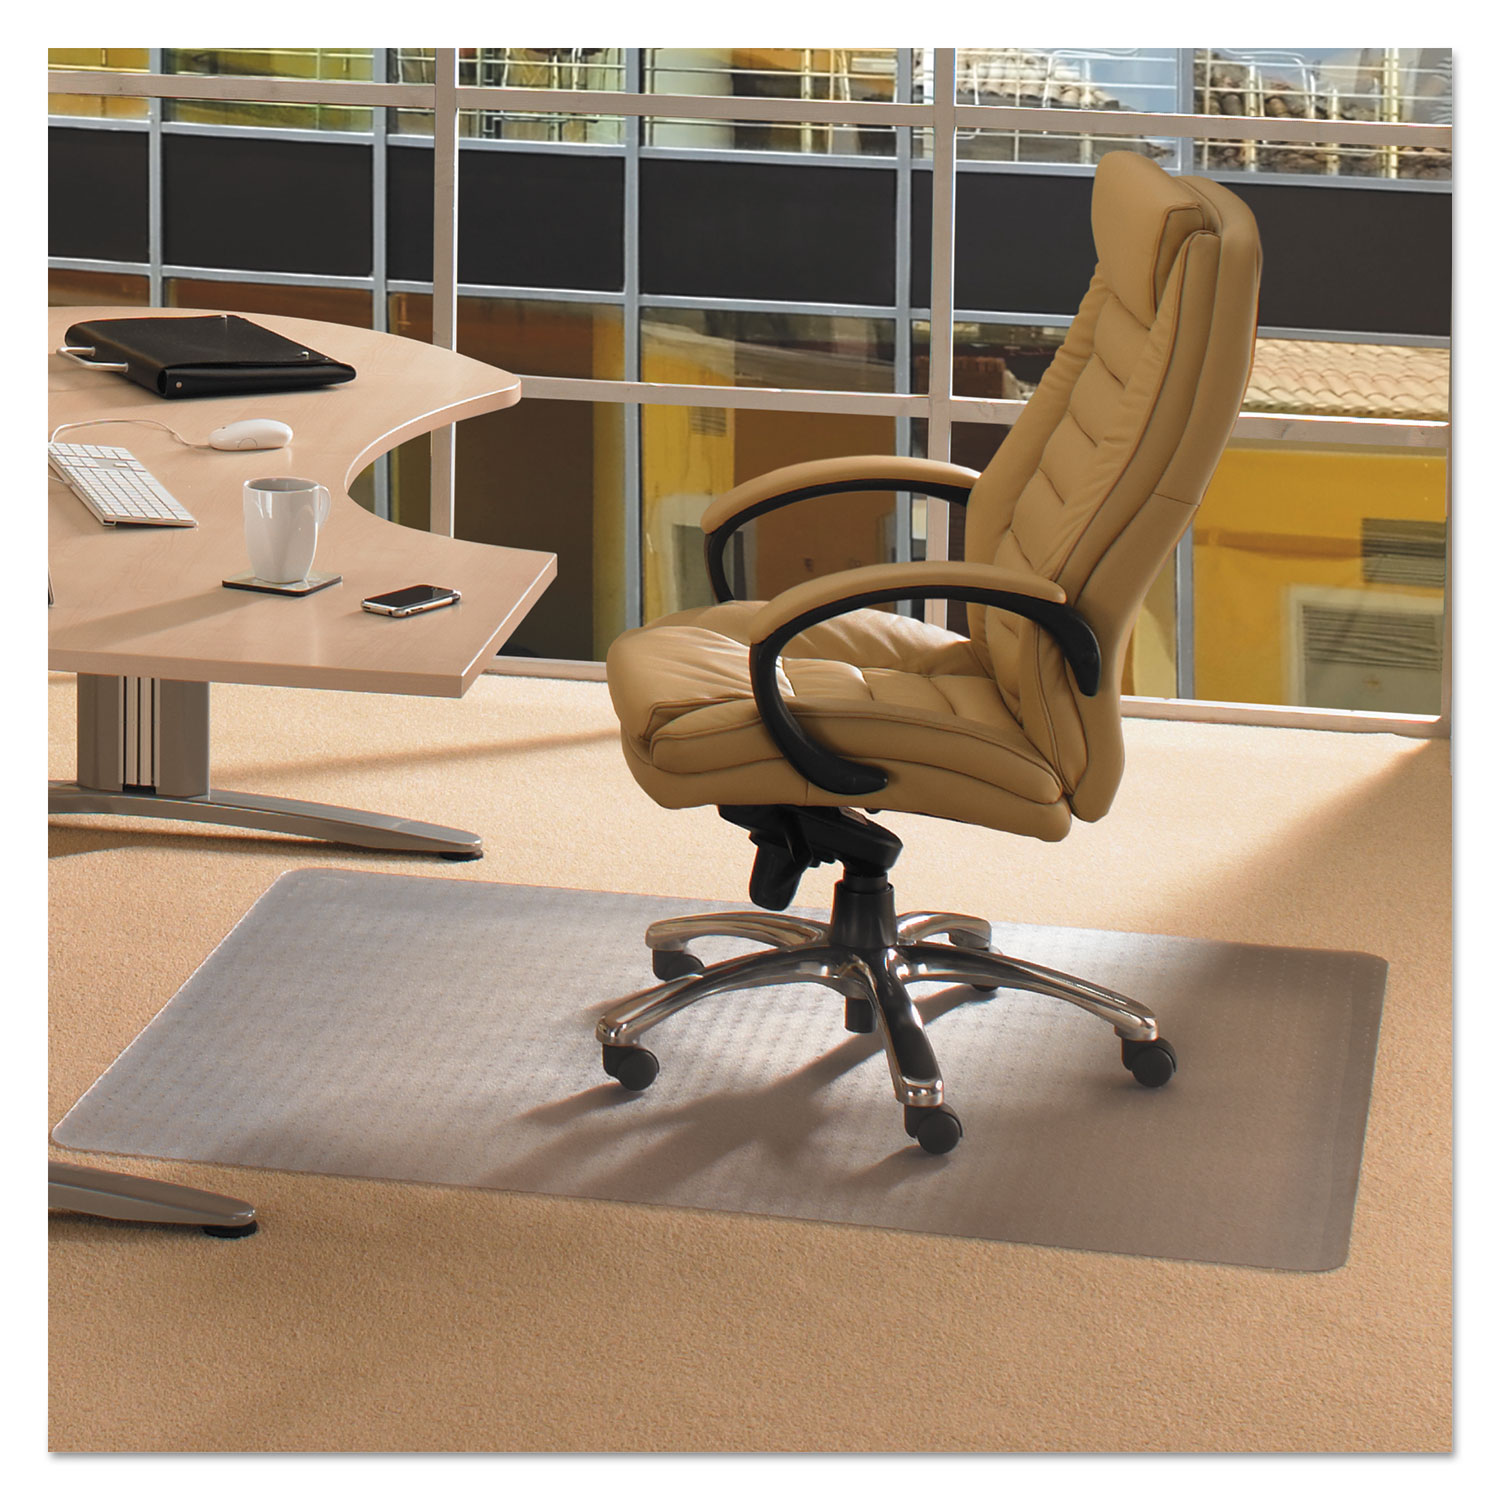  Floortex PF1113425EV Cleartex Advantagemat Phthalate Free PVC Chair Mat for Low Pile Carpet, 53 x 45, Clear (FLRPF1113425EV) 